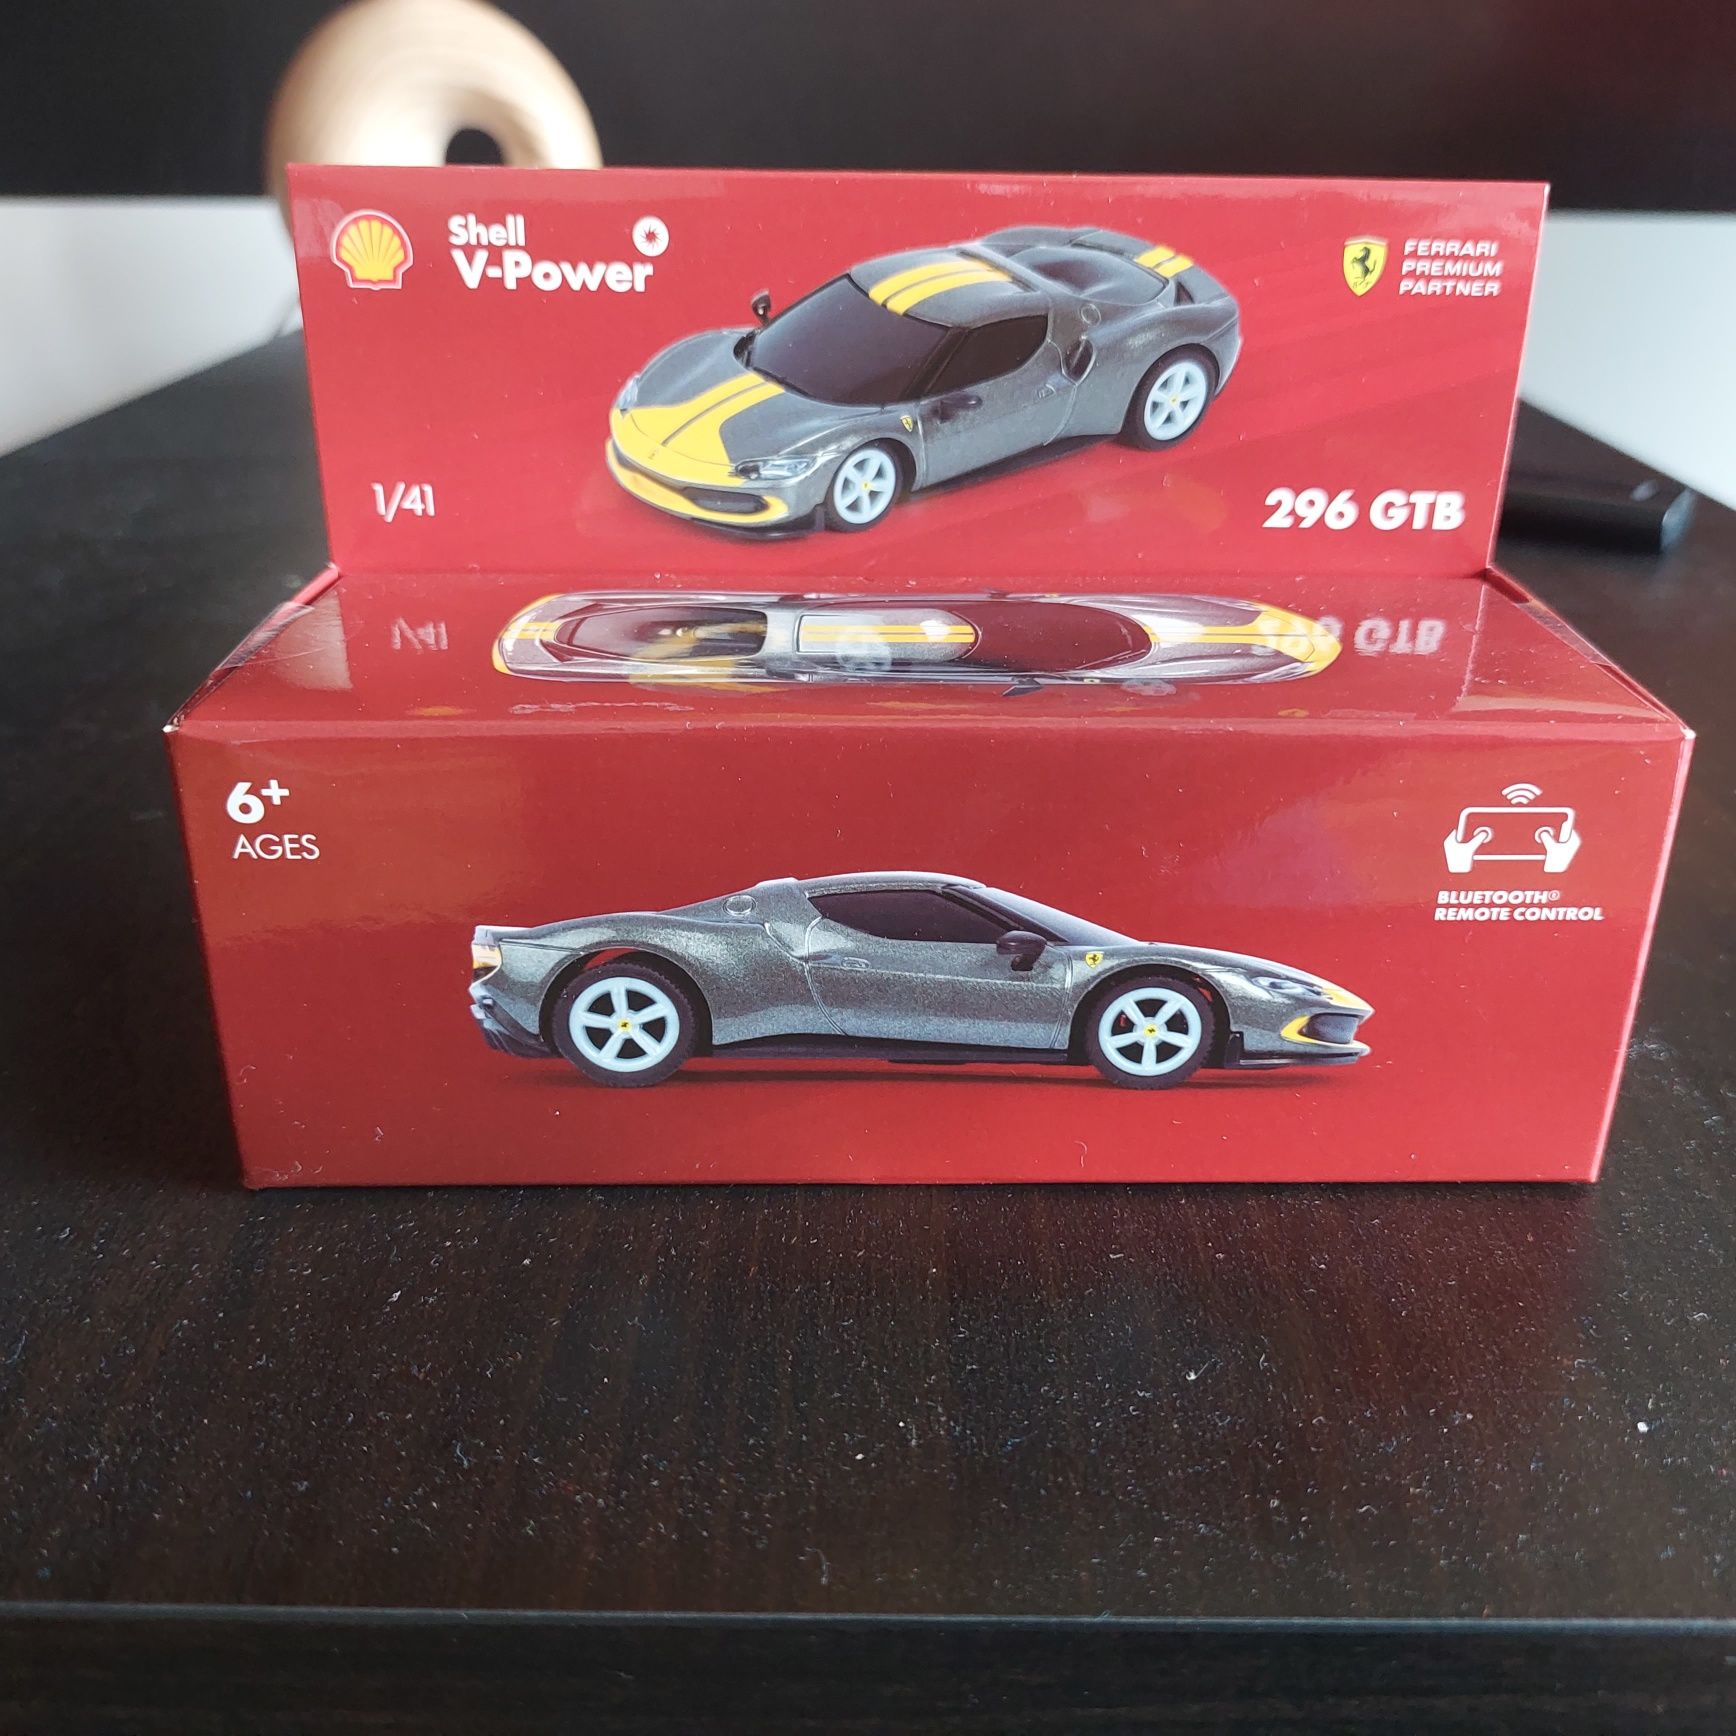 Modele aut Ferrari shell